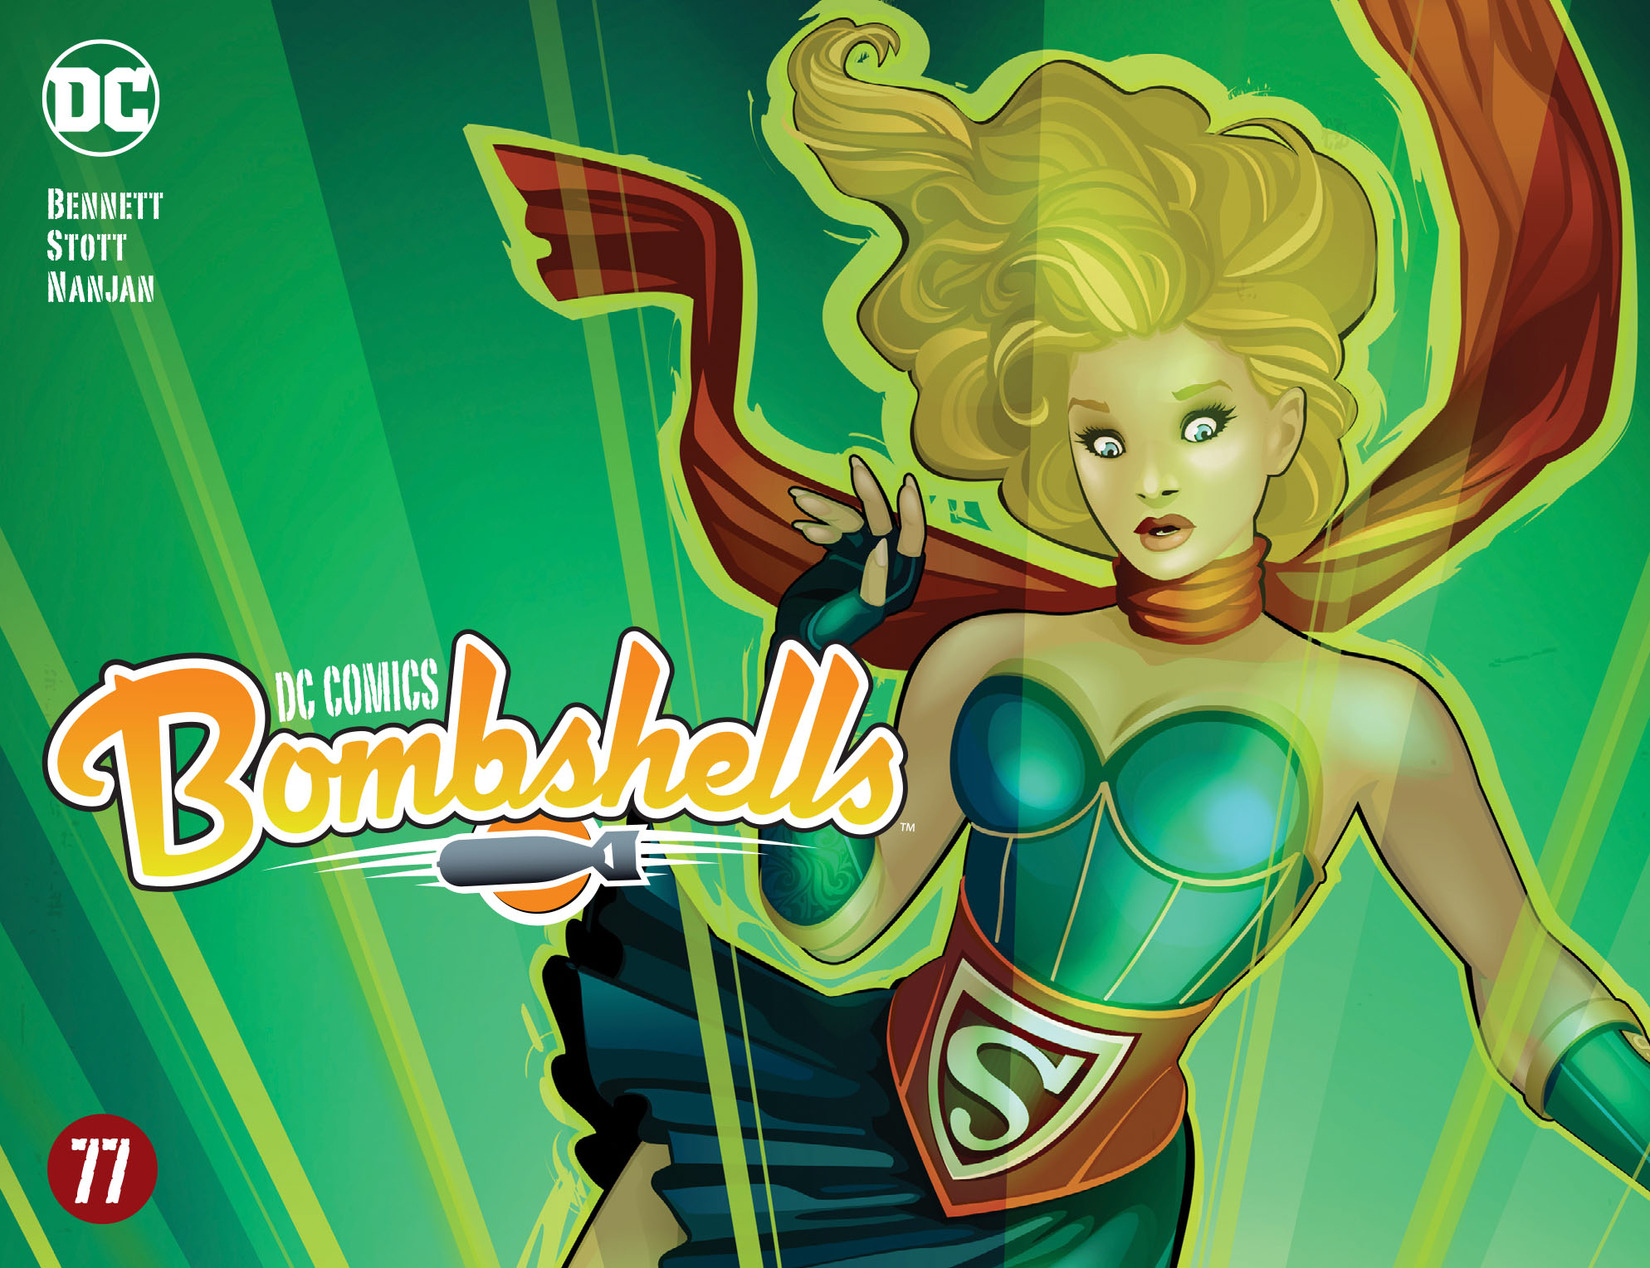 DC Comics - Bombshells (2015-): Chapter 77 - Page 1